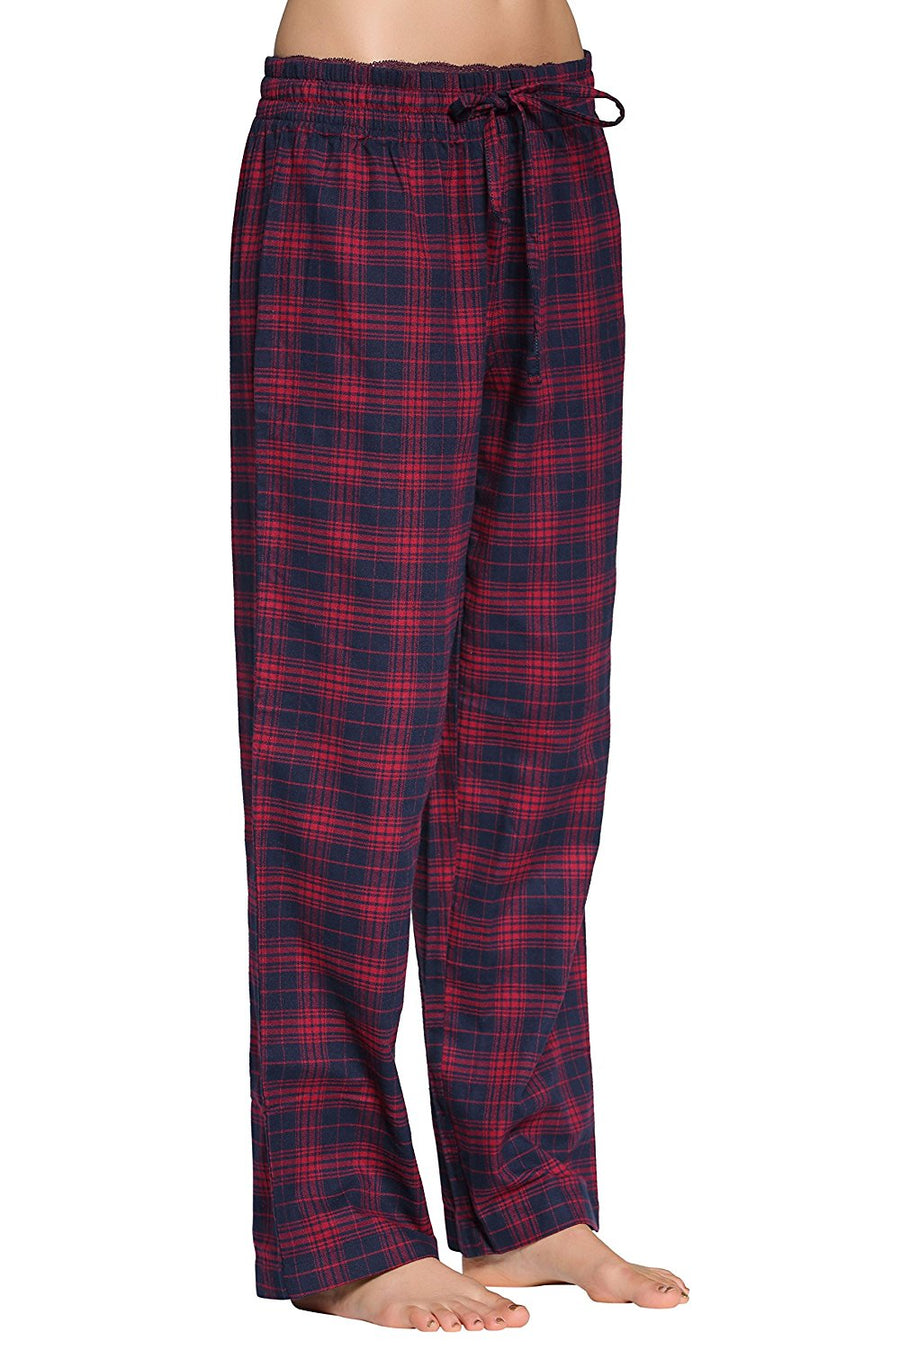 Classic Plaid Pajama Pants Women Cotton Loose Loungewear Comfy Stretch  Drawstring Pj Bottoms Plus Size Sleepwear